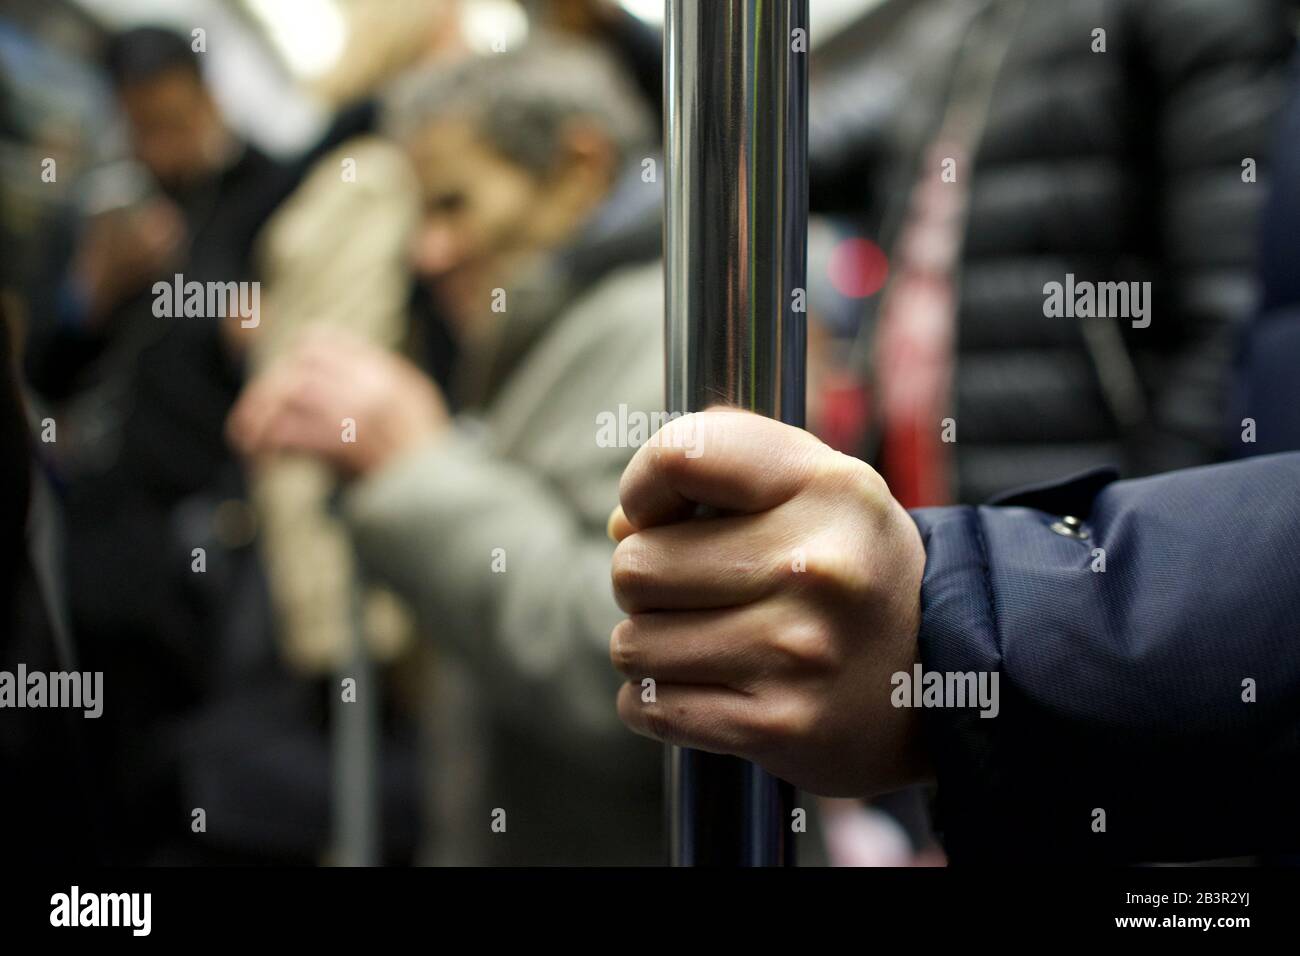 Man's hand holding handrail in train Stock Photo